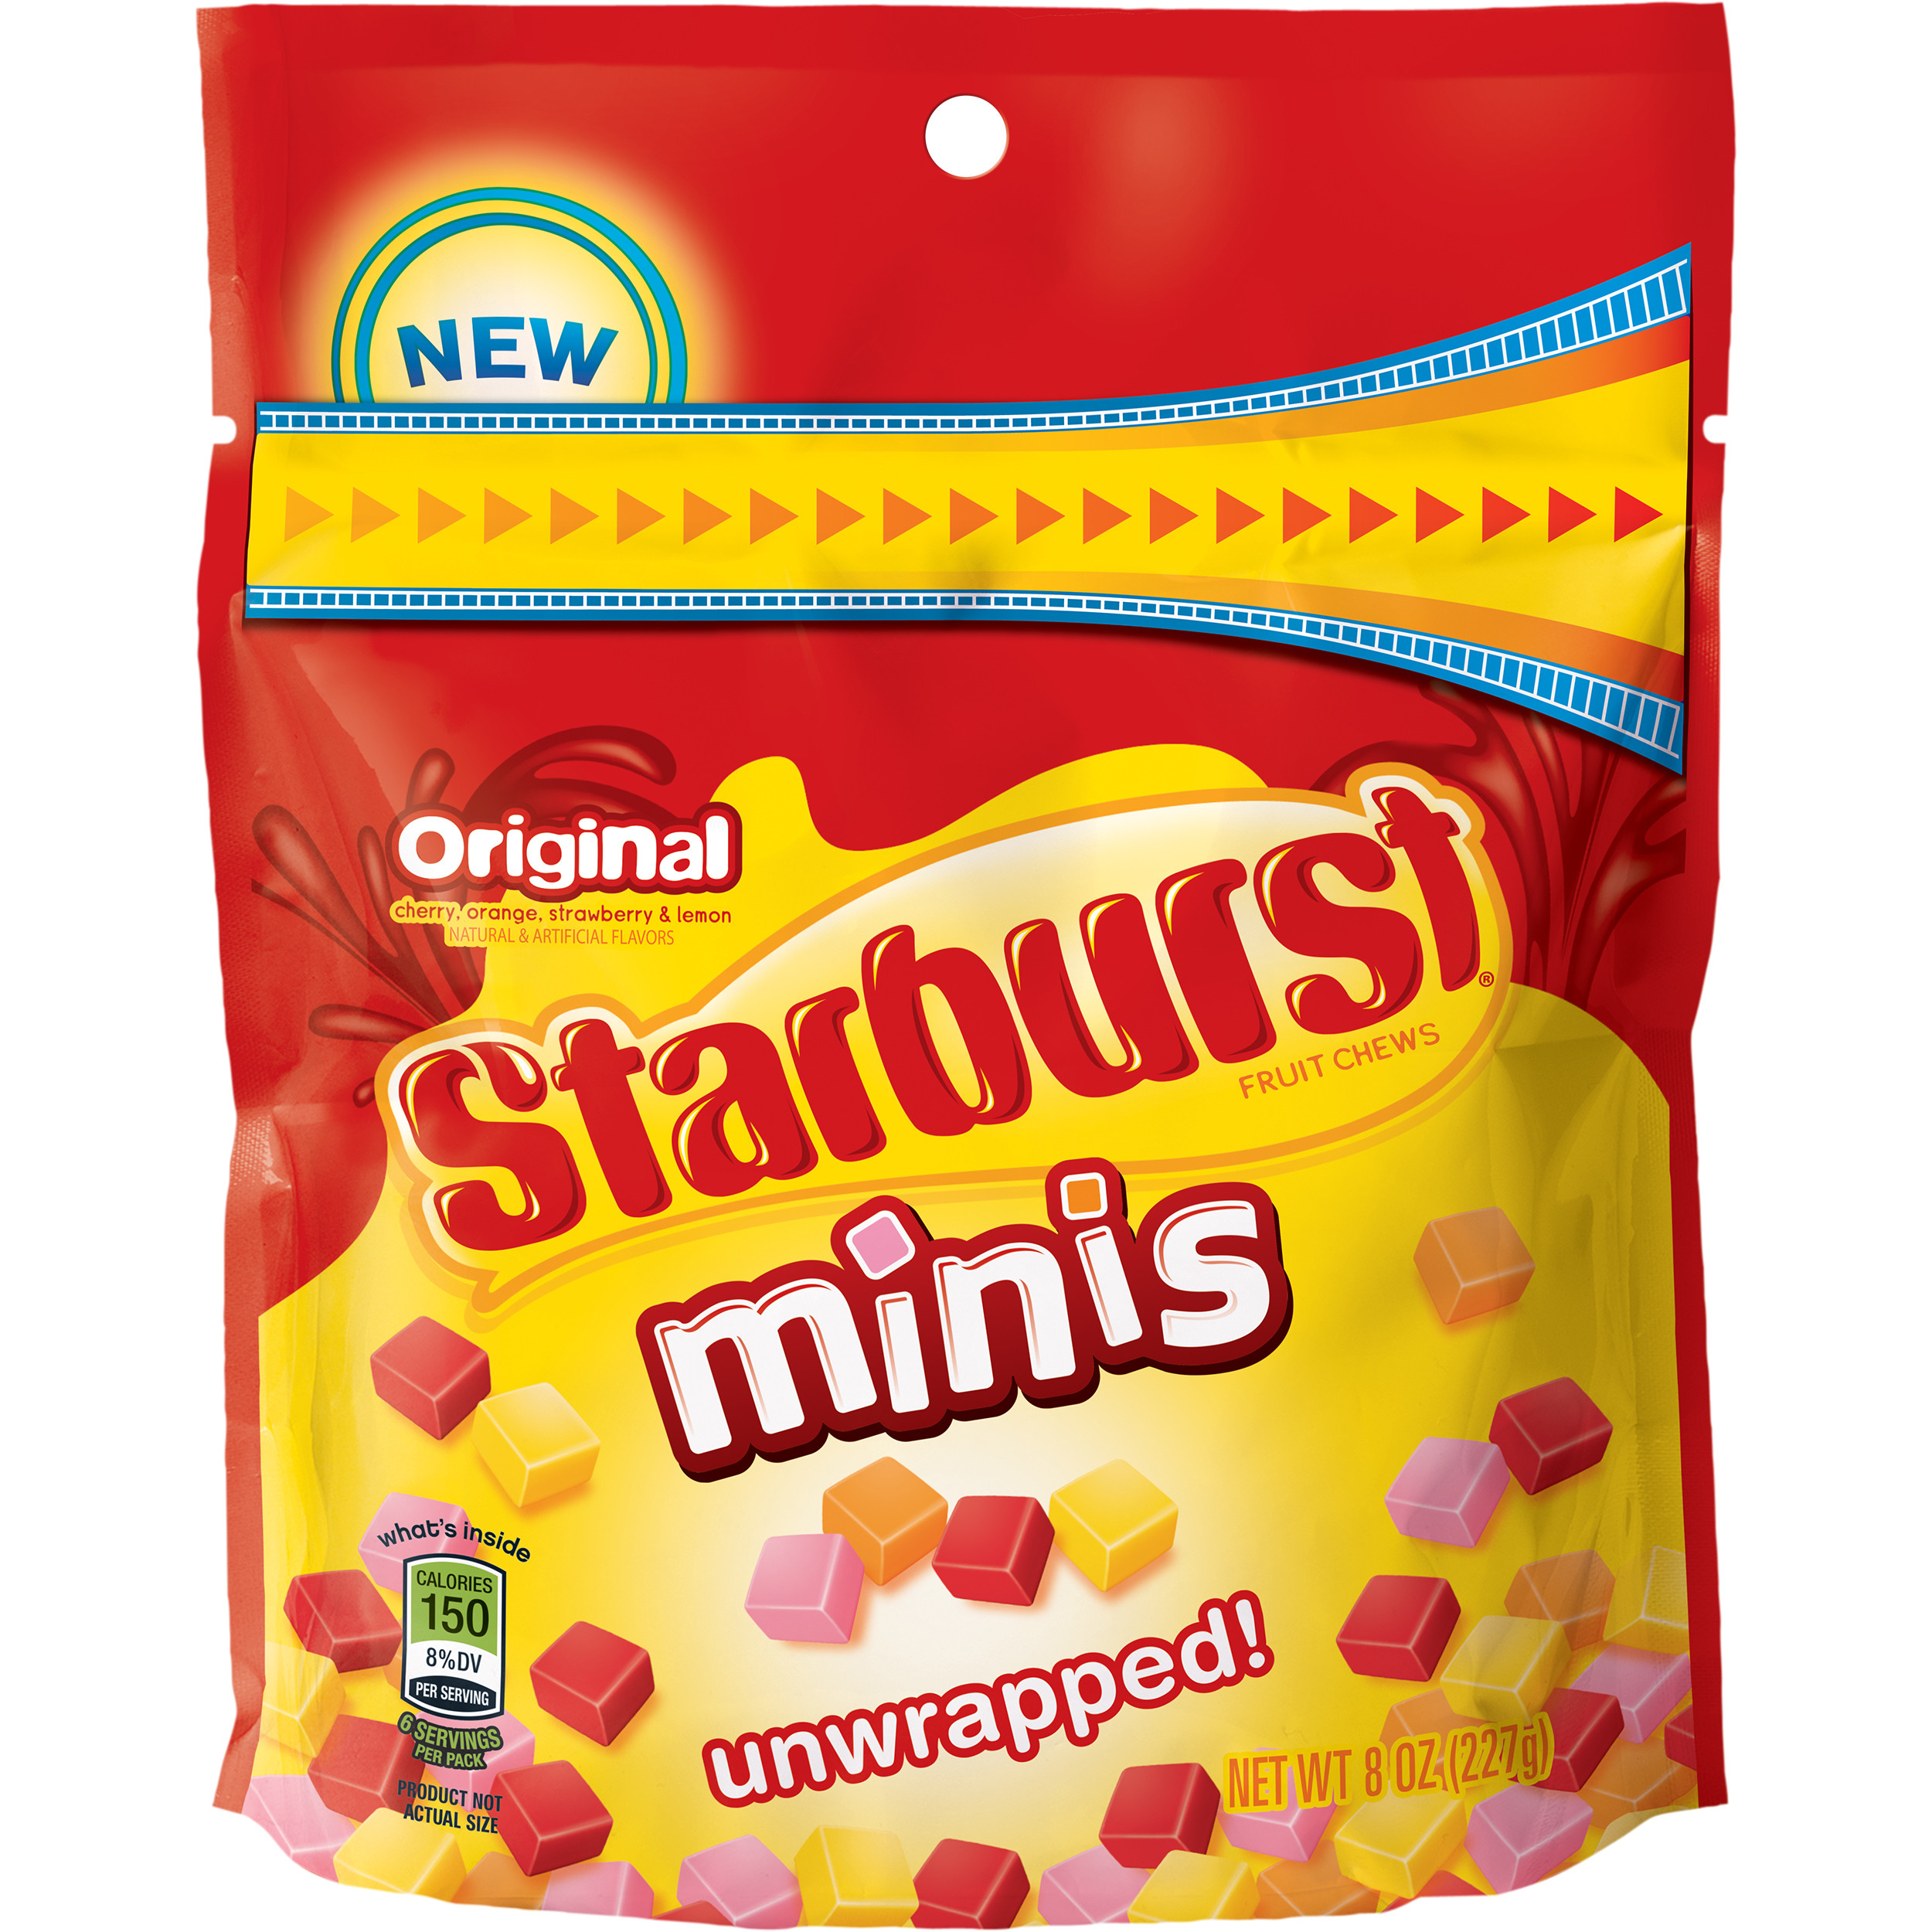 Starburst Original Minis Fruit Chews Candy Bag, 8 ounce - Walmart.com